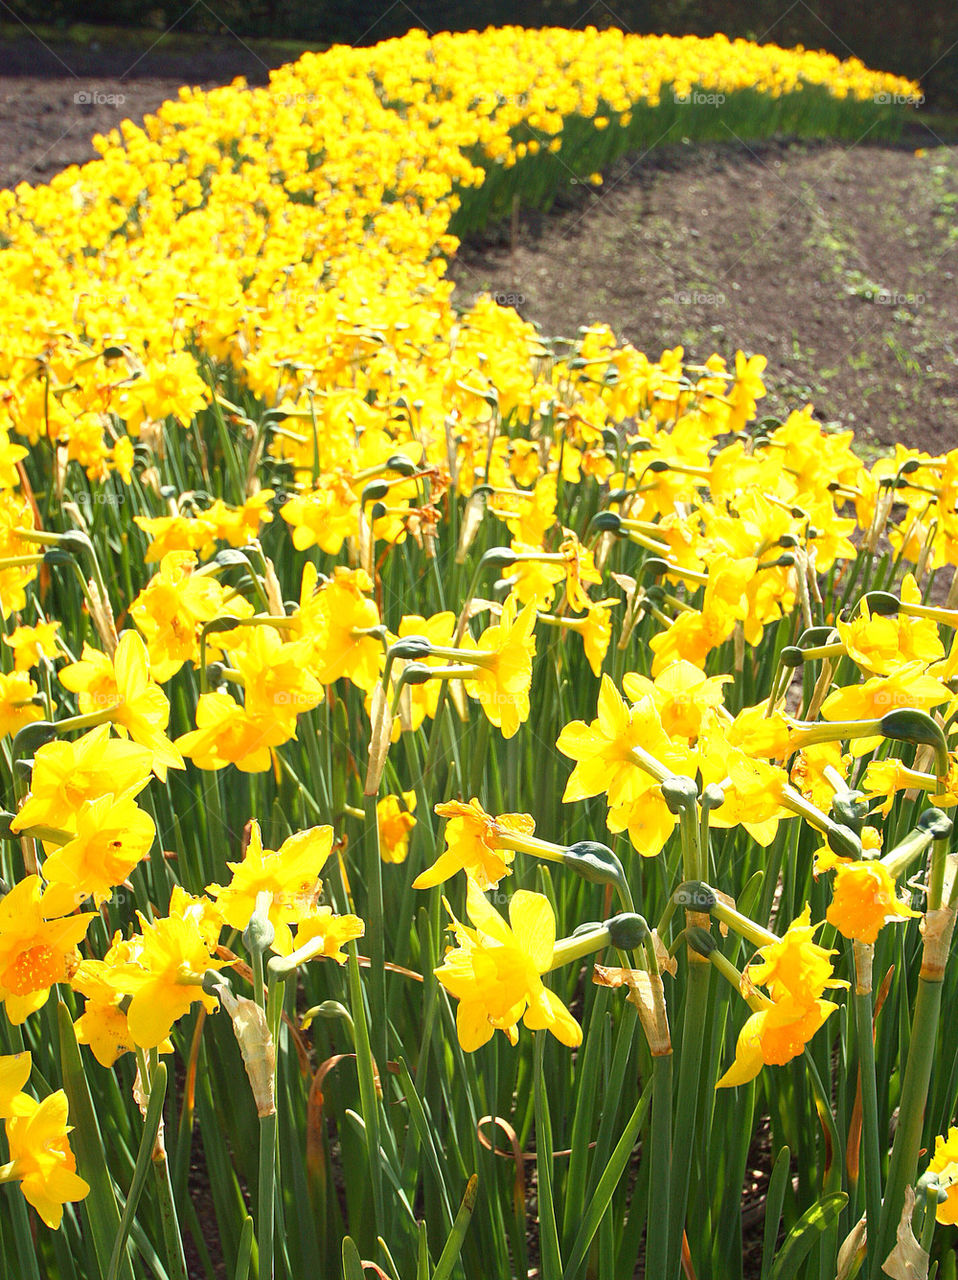 Daffodil road